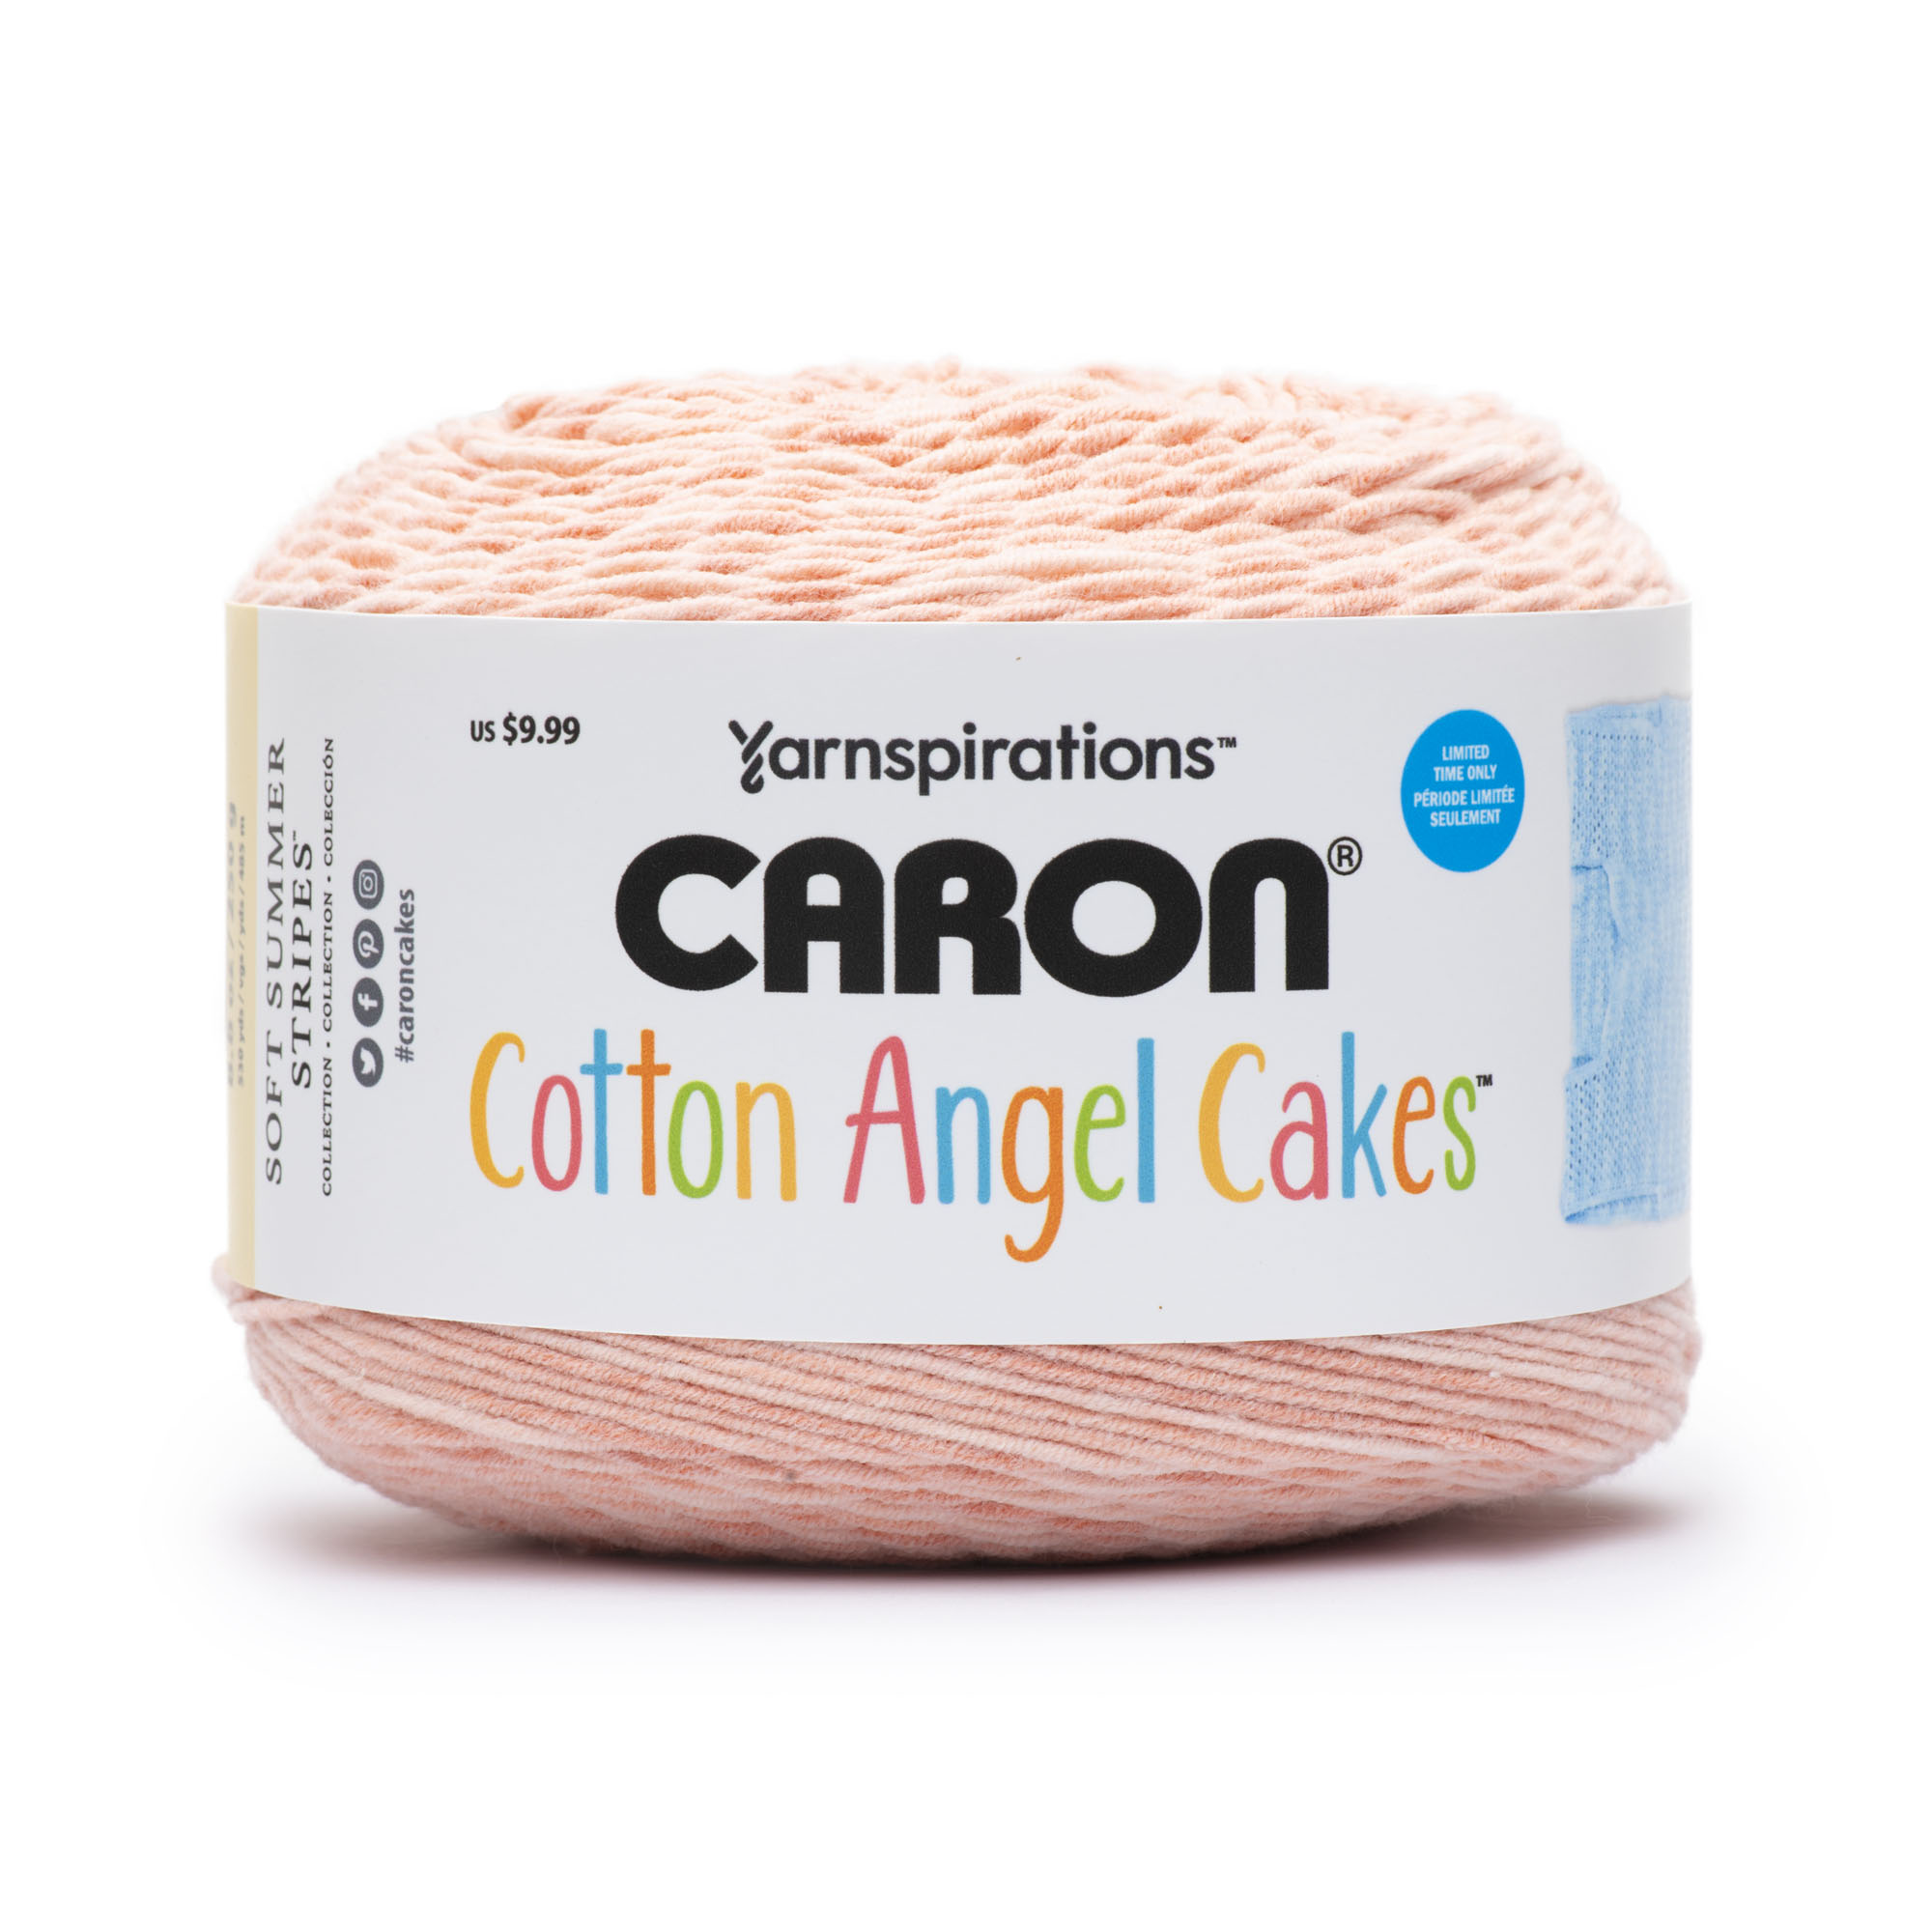  Caron Cotton Angel Cakes 250g